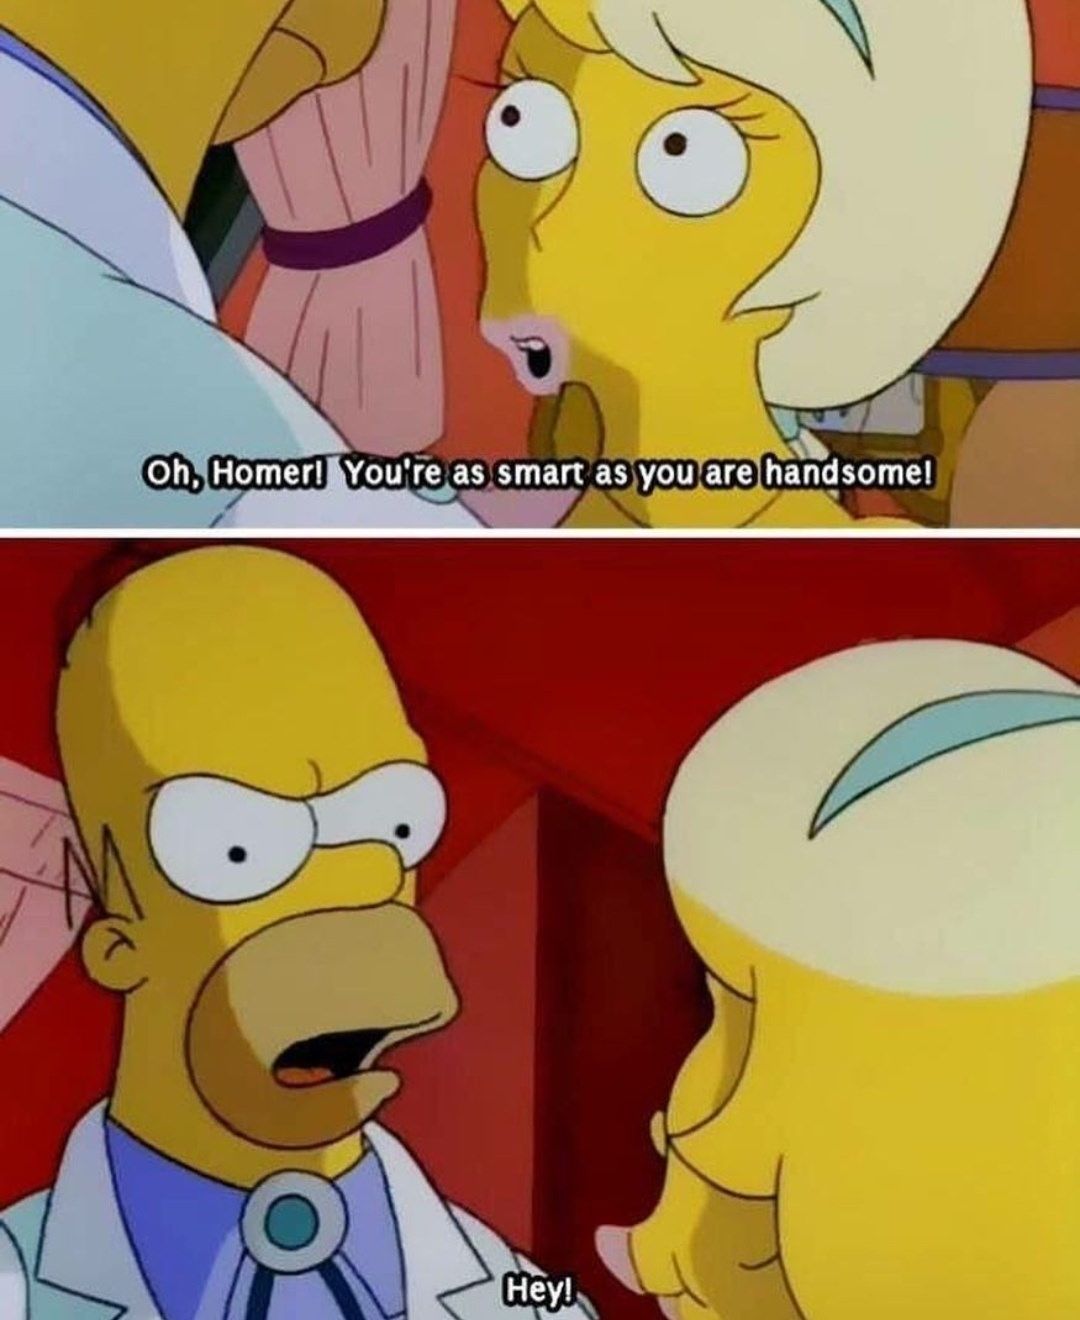 Homer was always the brightest Simpson